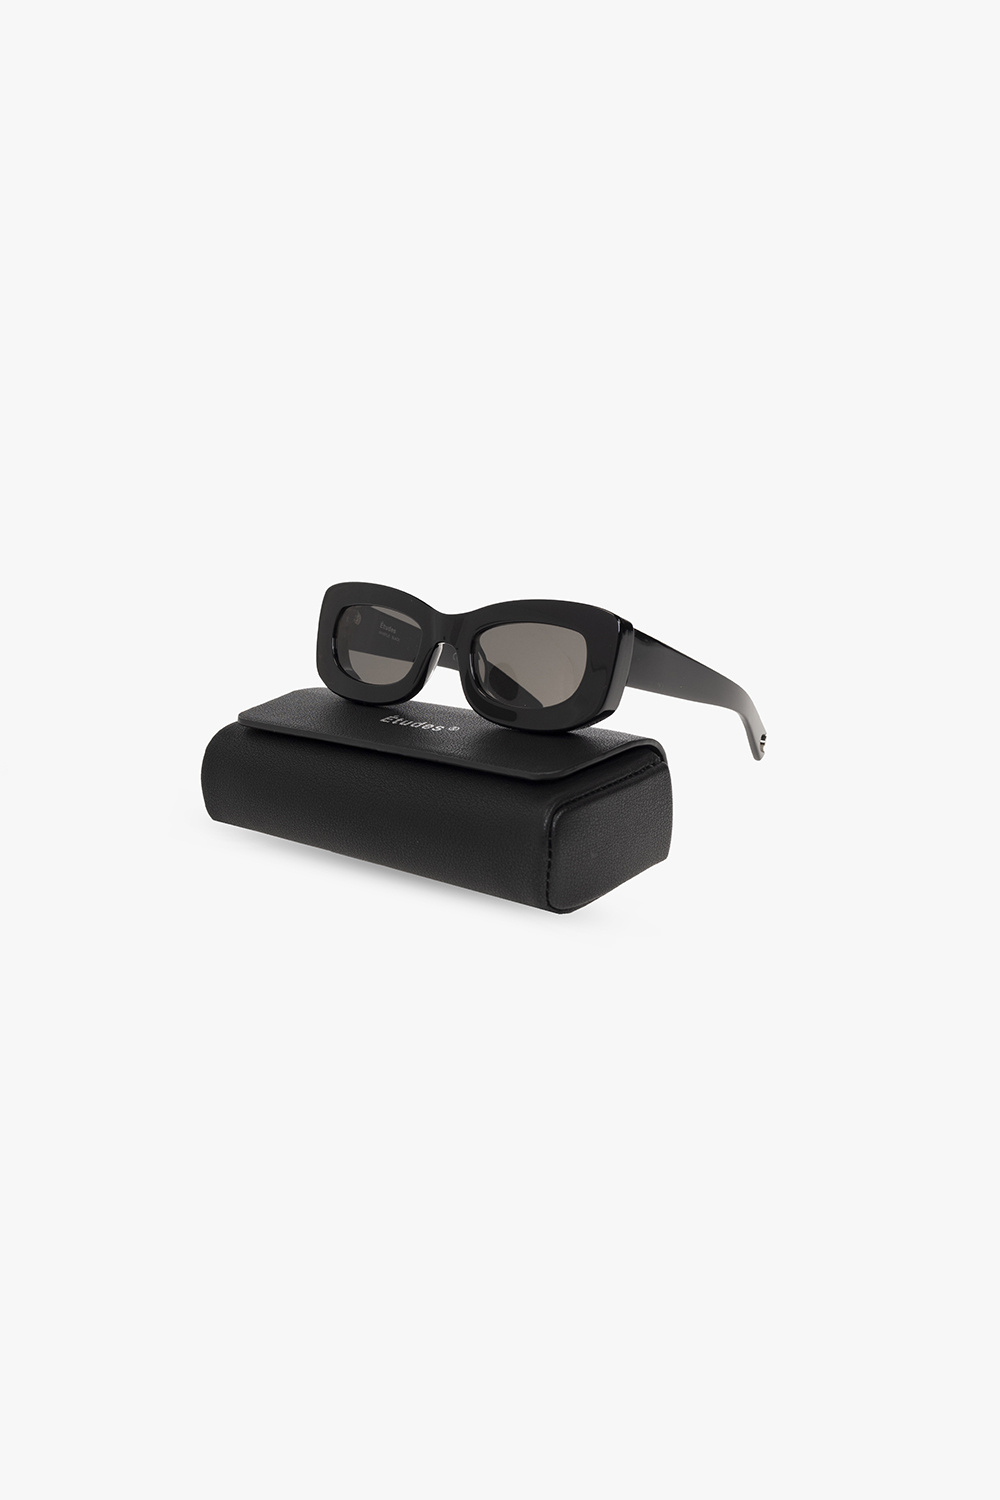 Etudes ‘Whistle’ gucci sunglasses